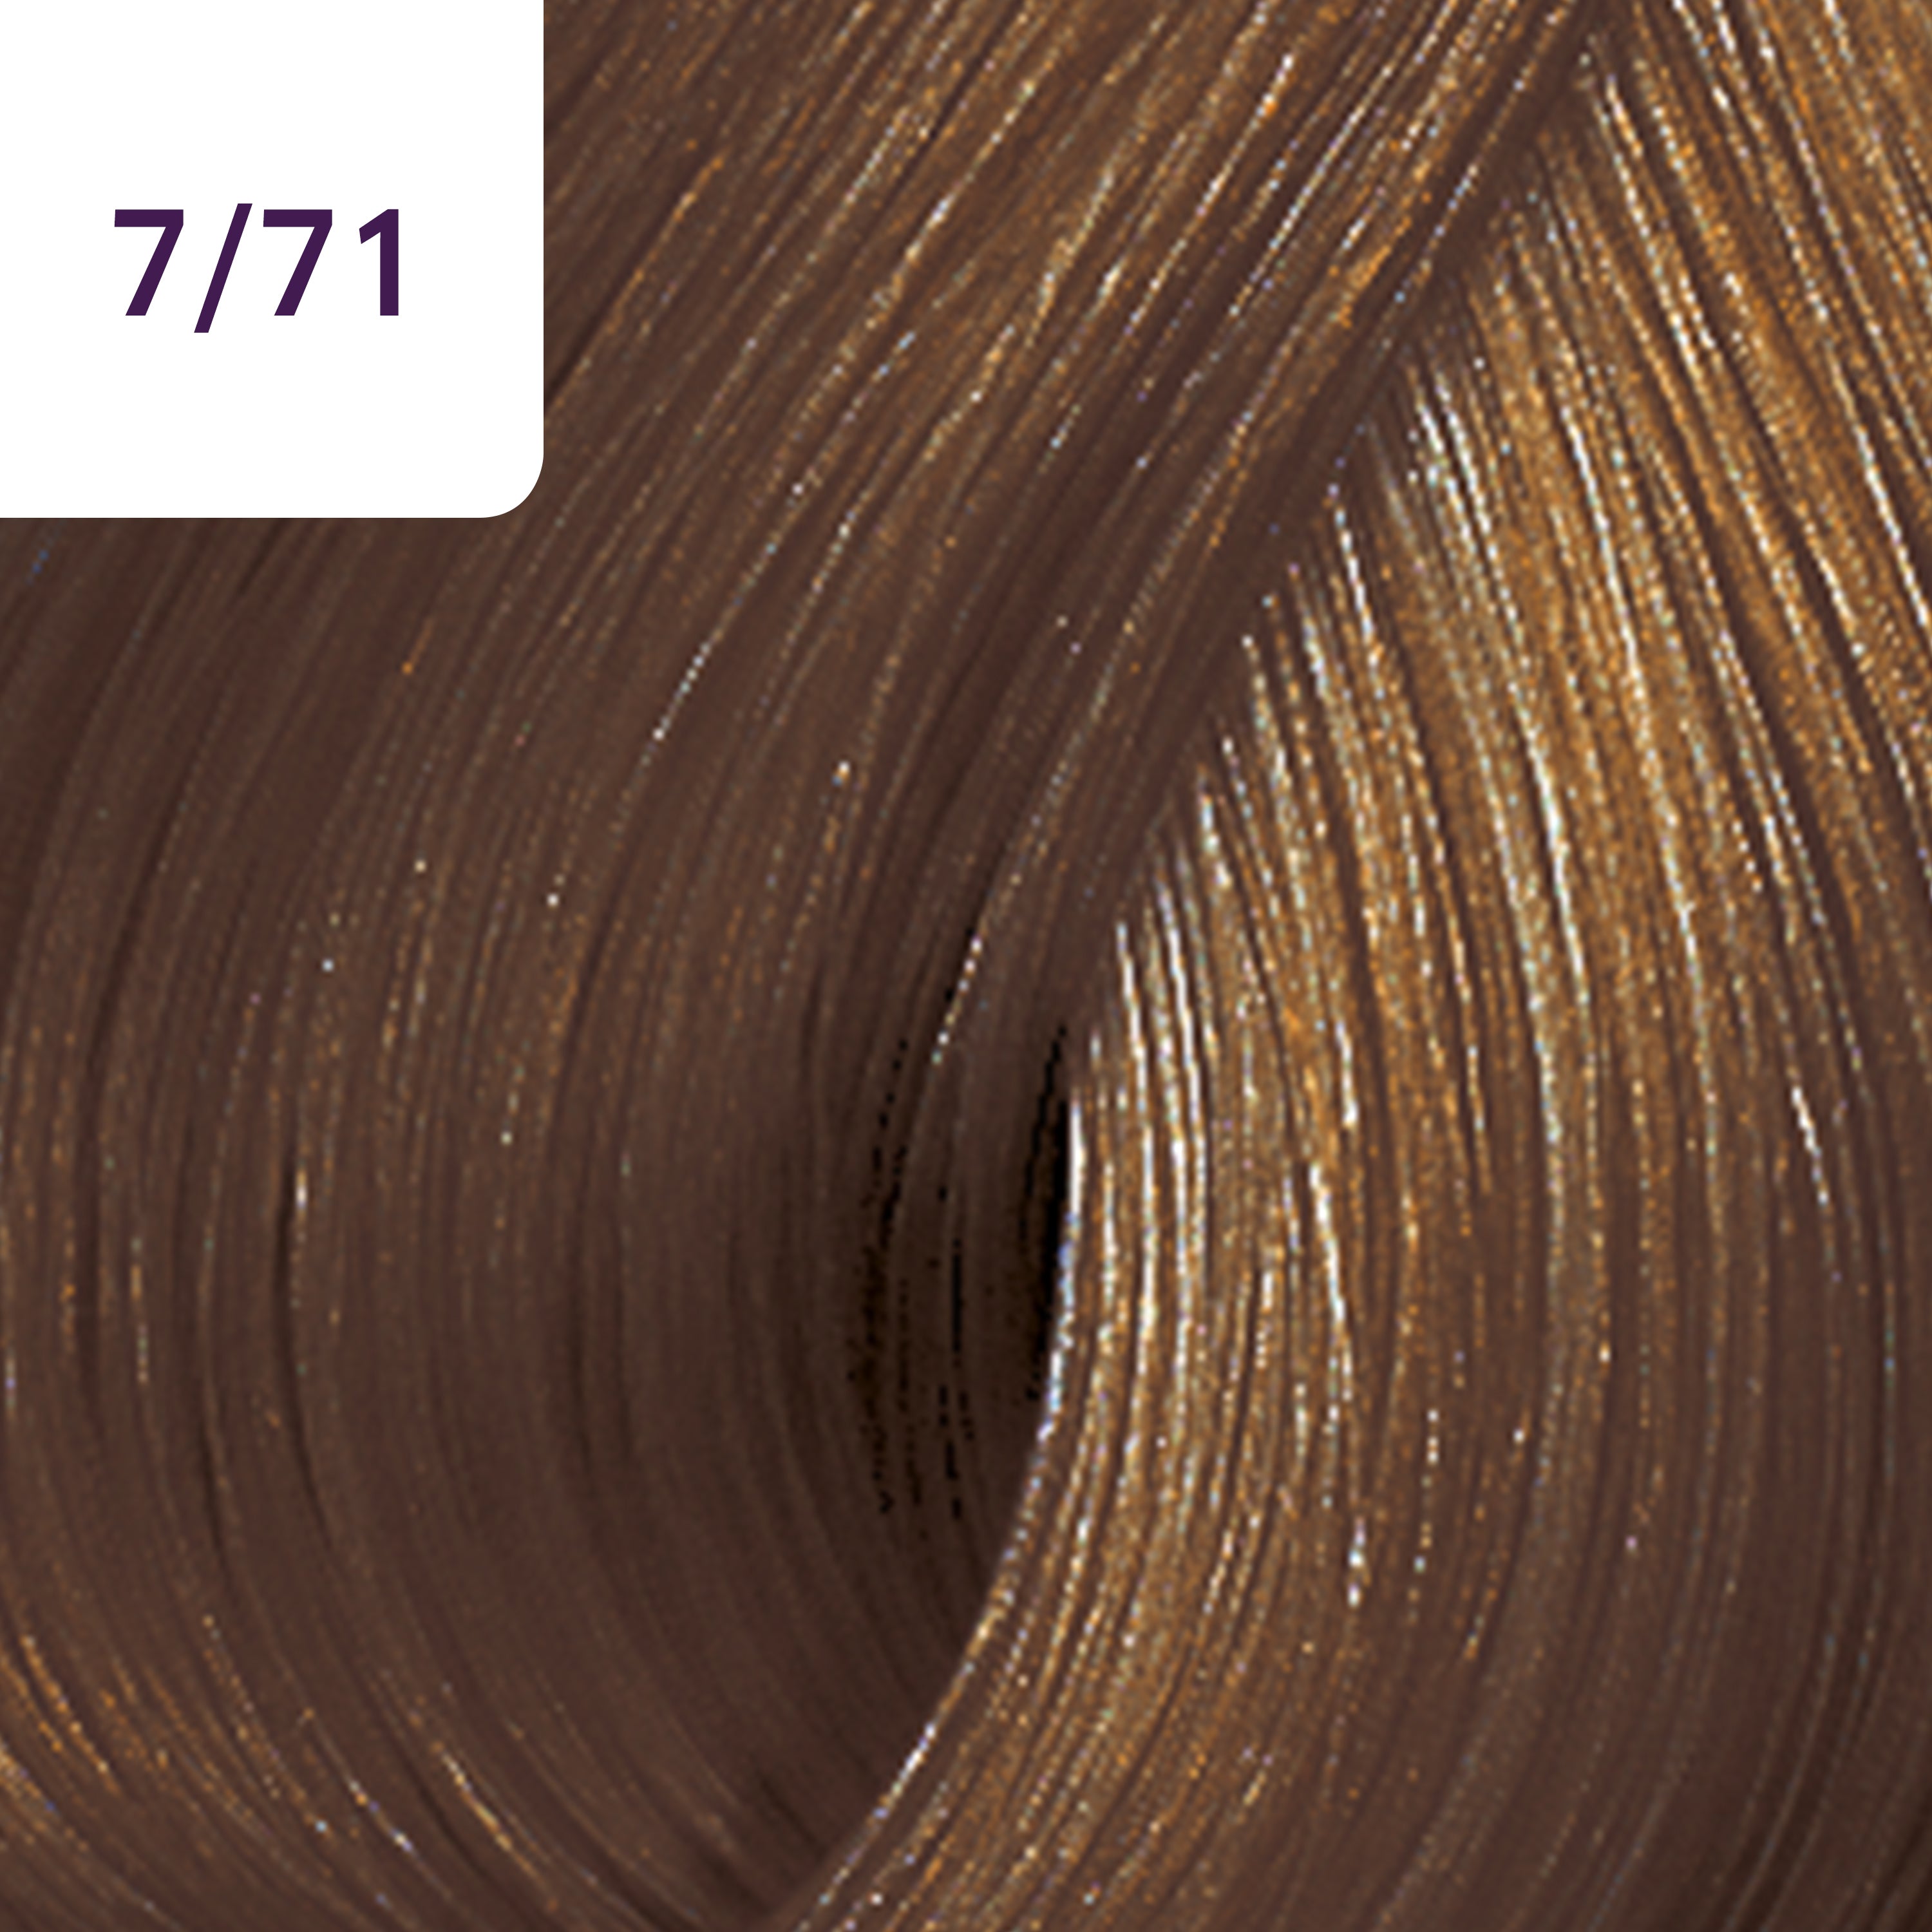 Wella Professional Color Touch Deep Browns 7/71 Mediumblond brun-fråga